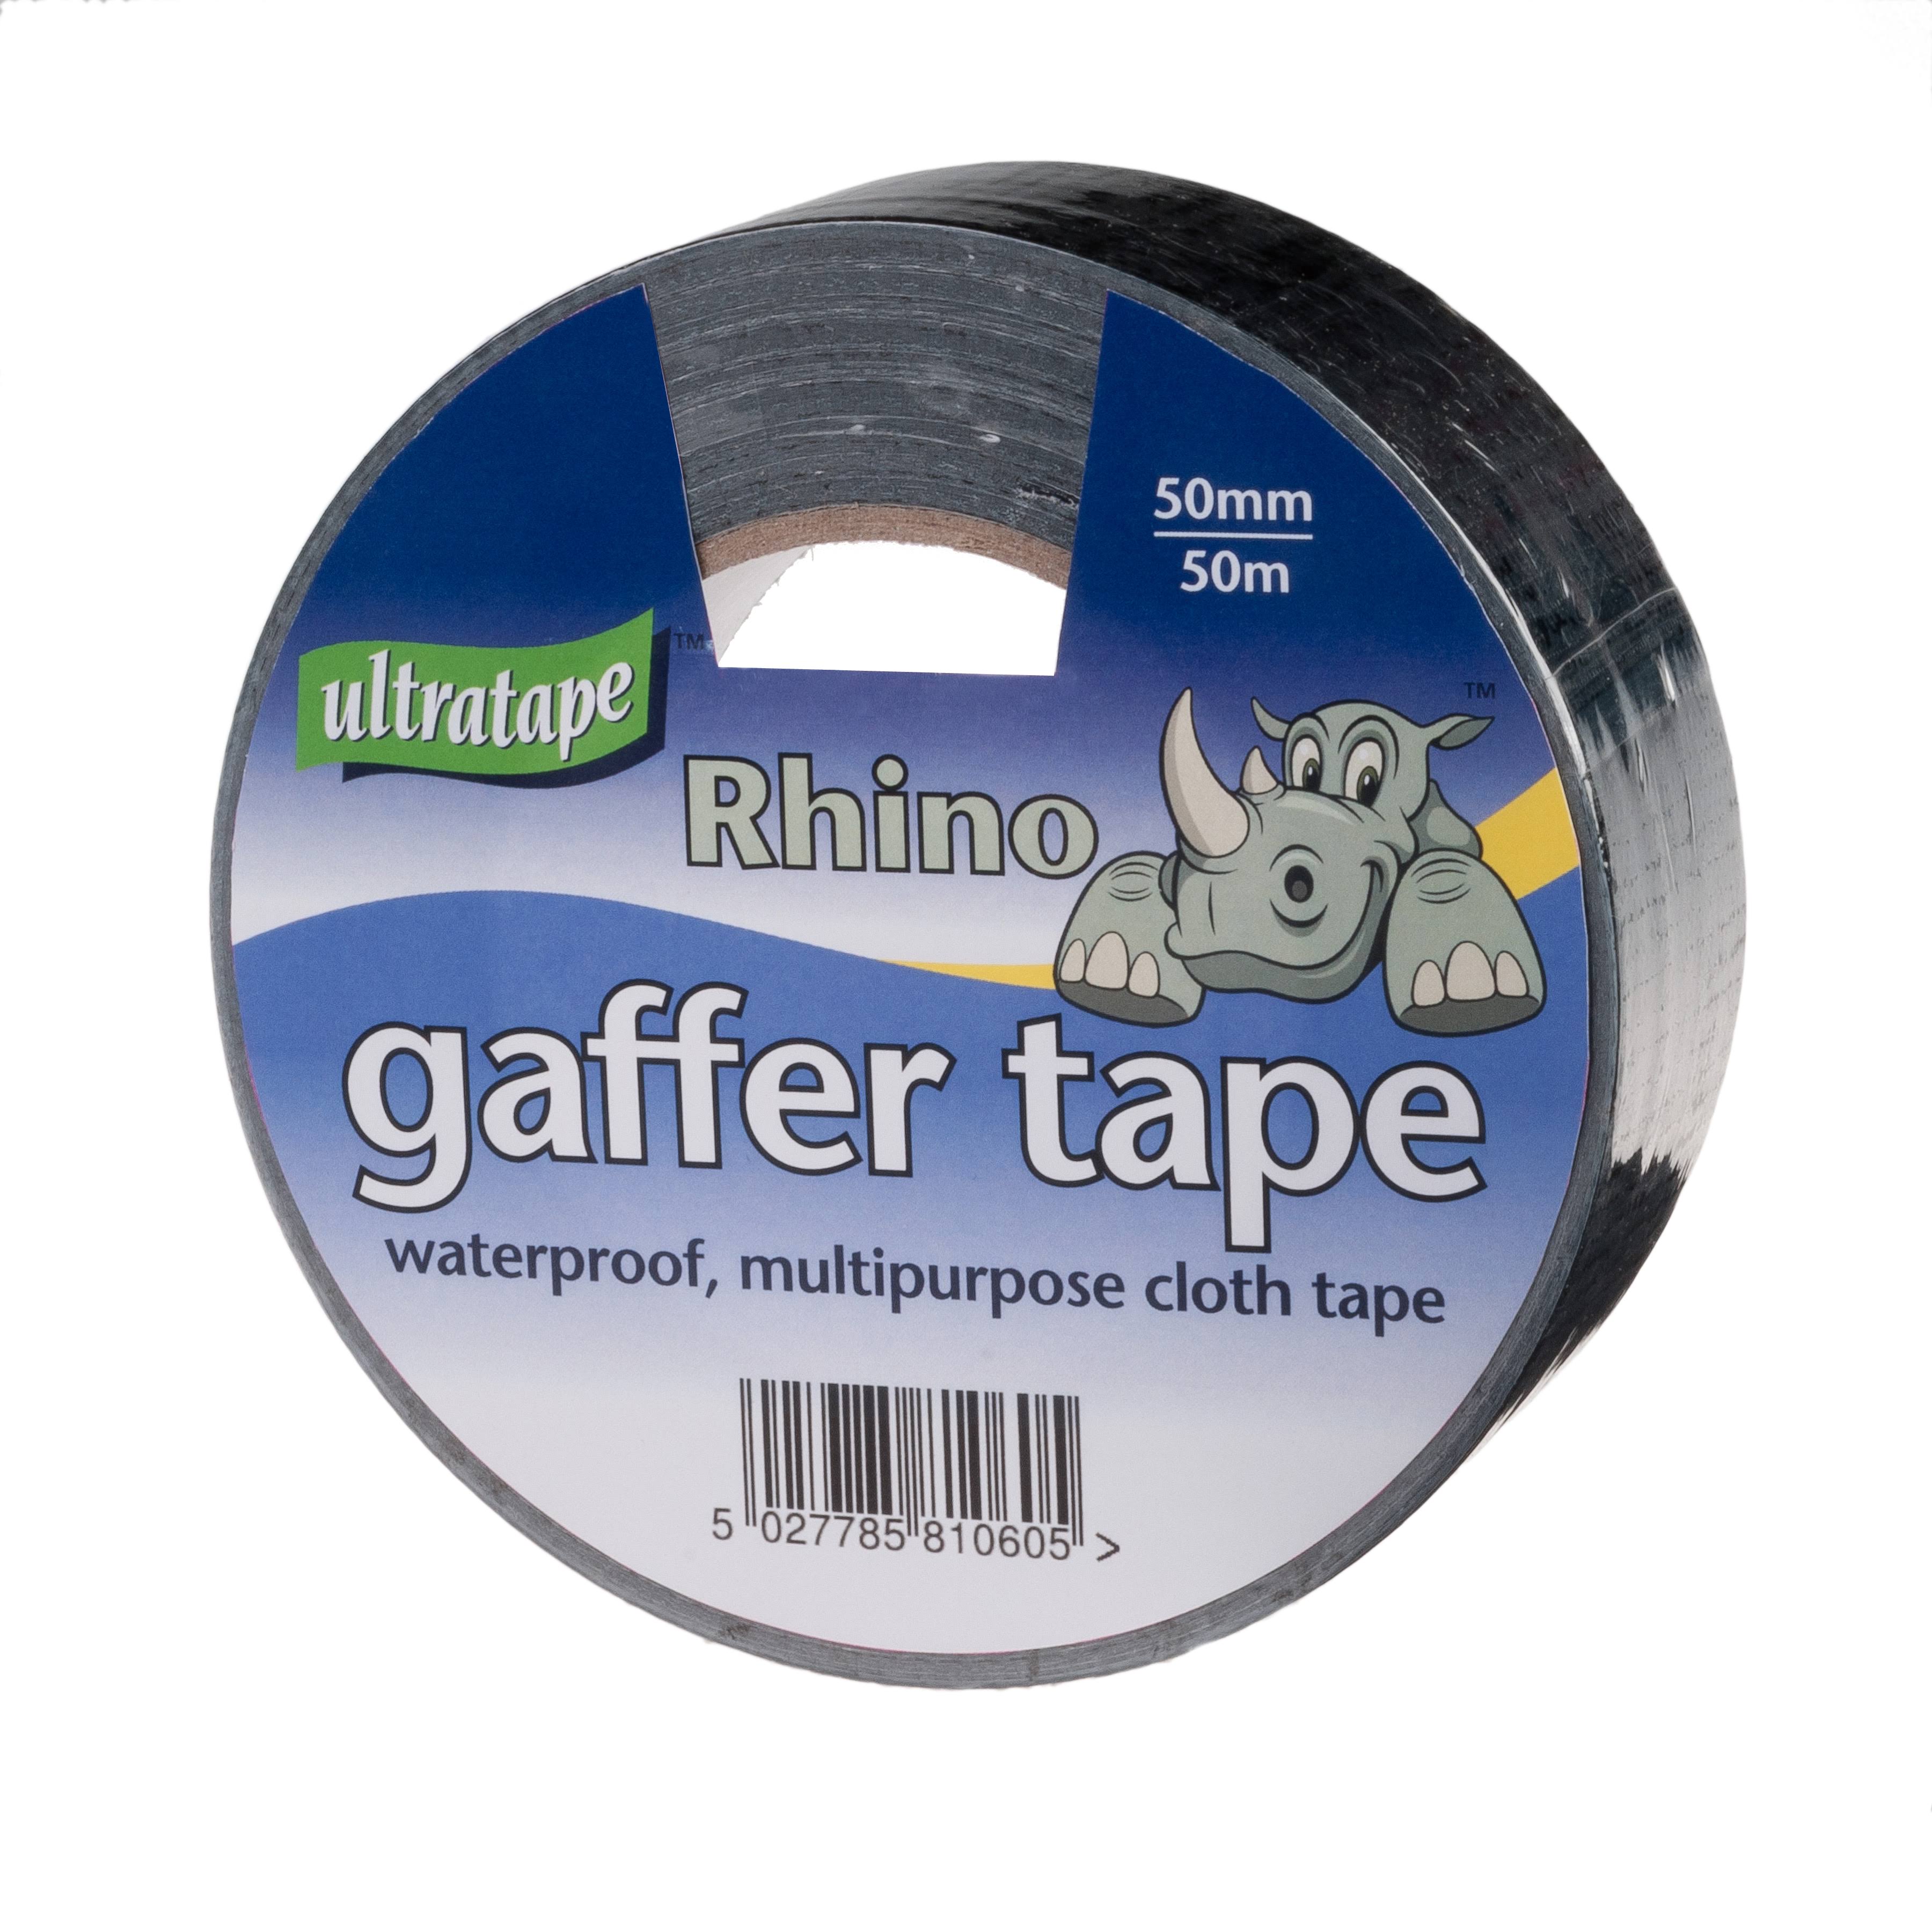 Rhino Geffer Tape Silver 50mm x 10m Ultratape Waterproof Multipurpose 